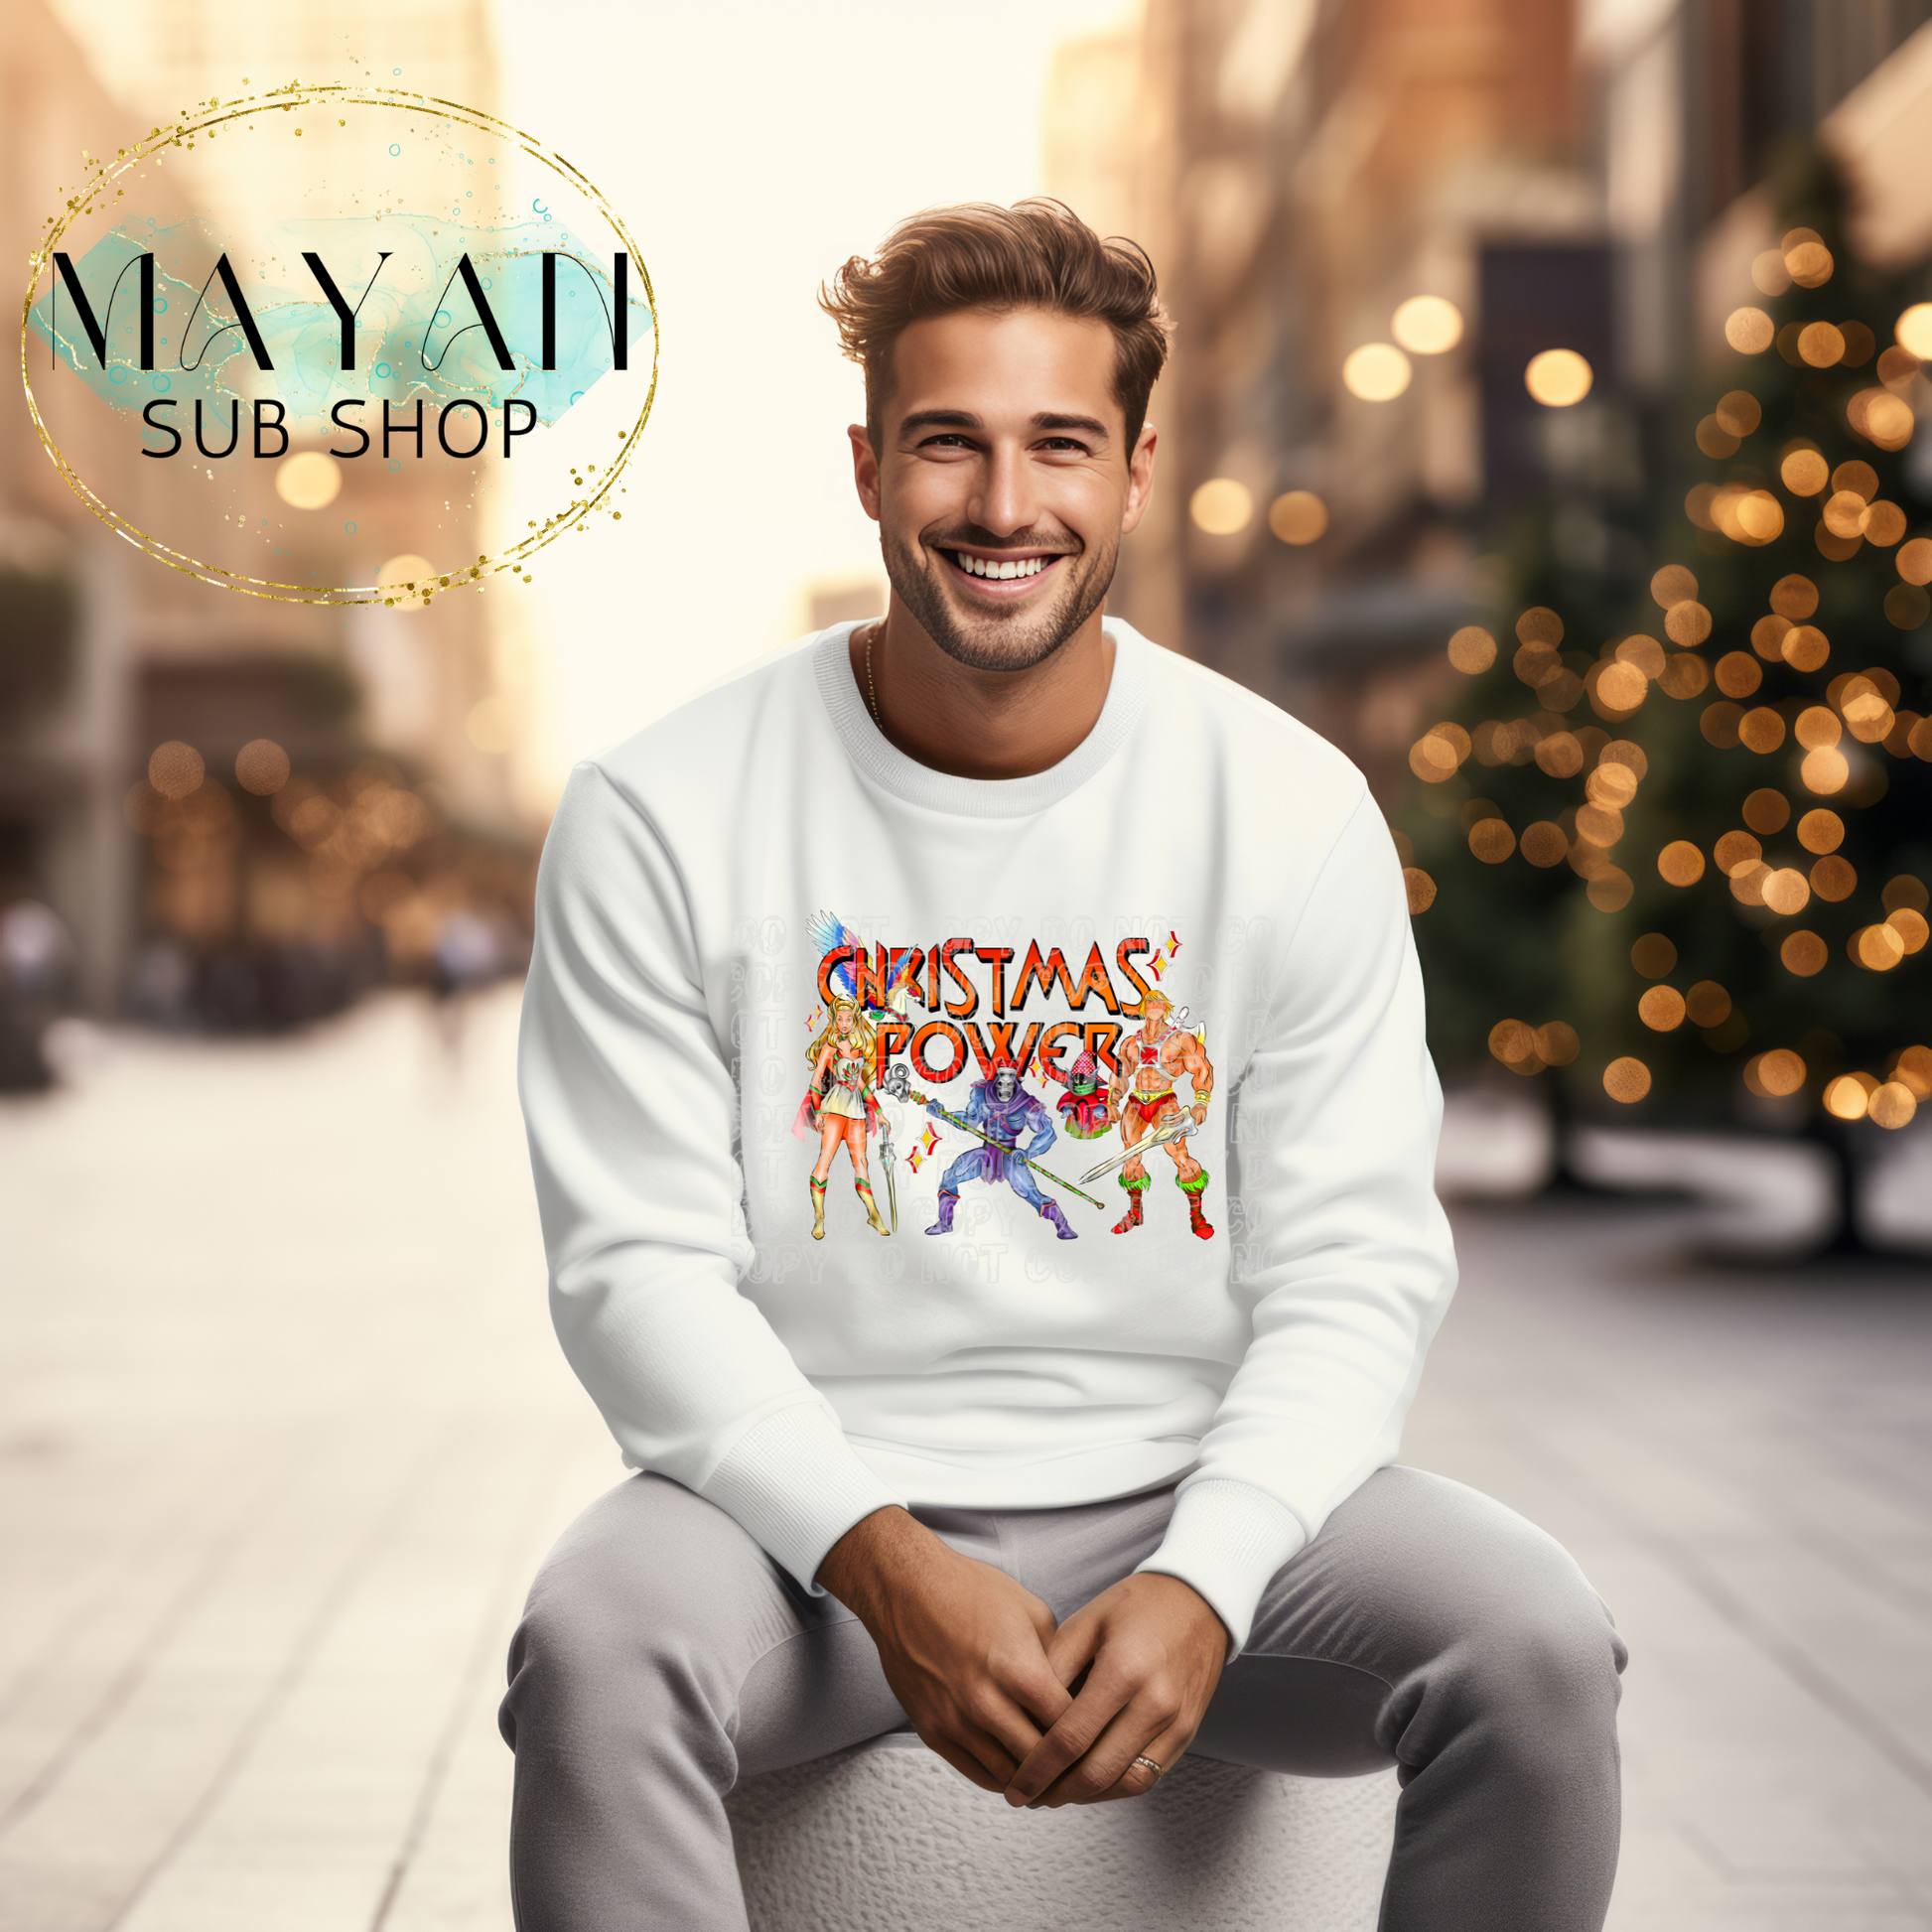 Christmas powers sweatshirt. -Mayan Sub Shop